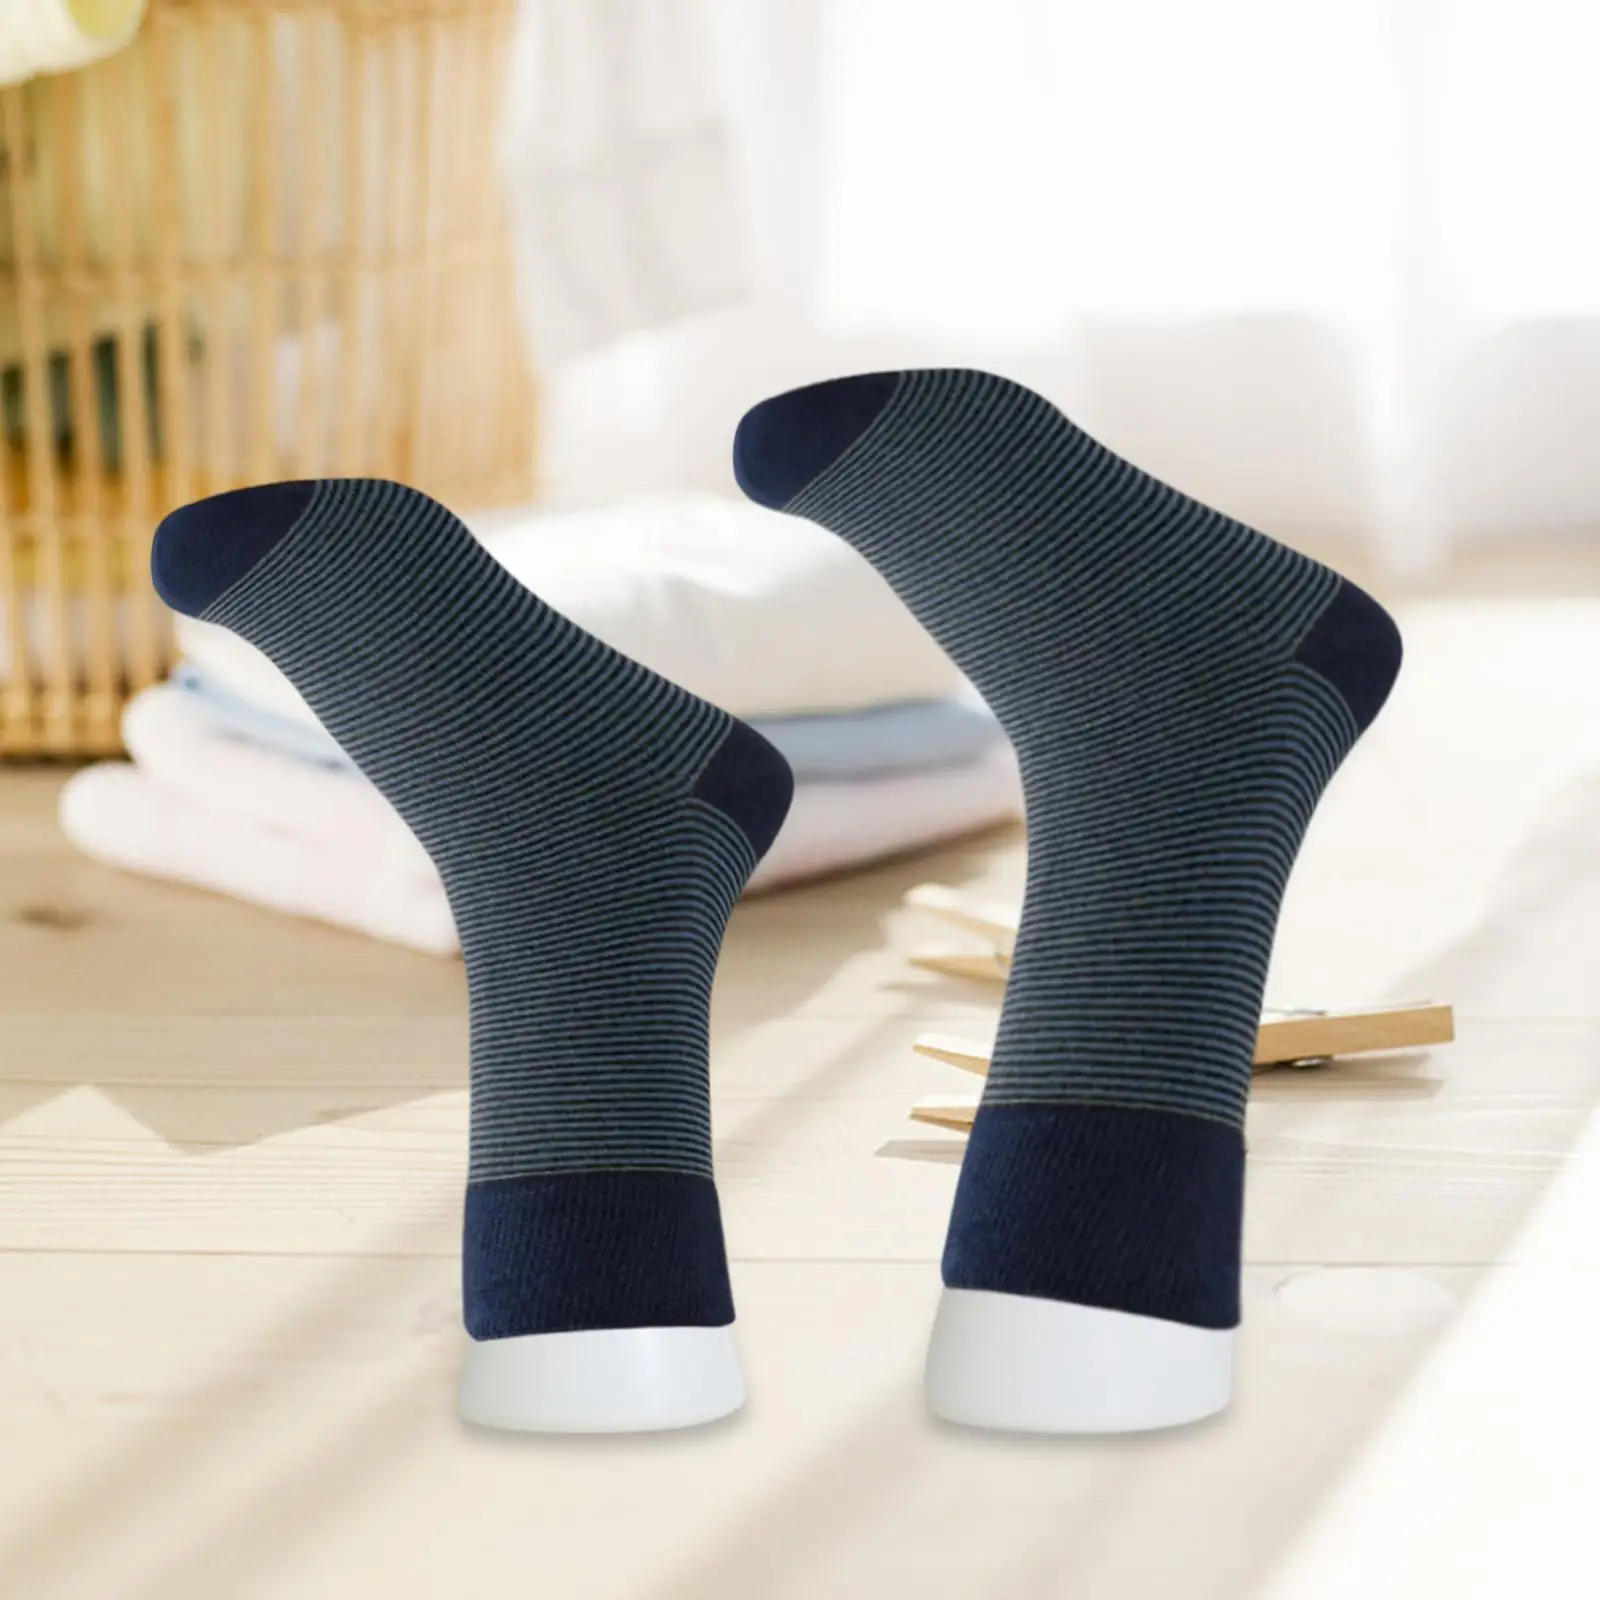 Mannequin Foot Lifelike Simulation Foot Model Foot Sock Display Model for Display Ankle Bracelet Socks Chains Commercial